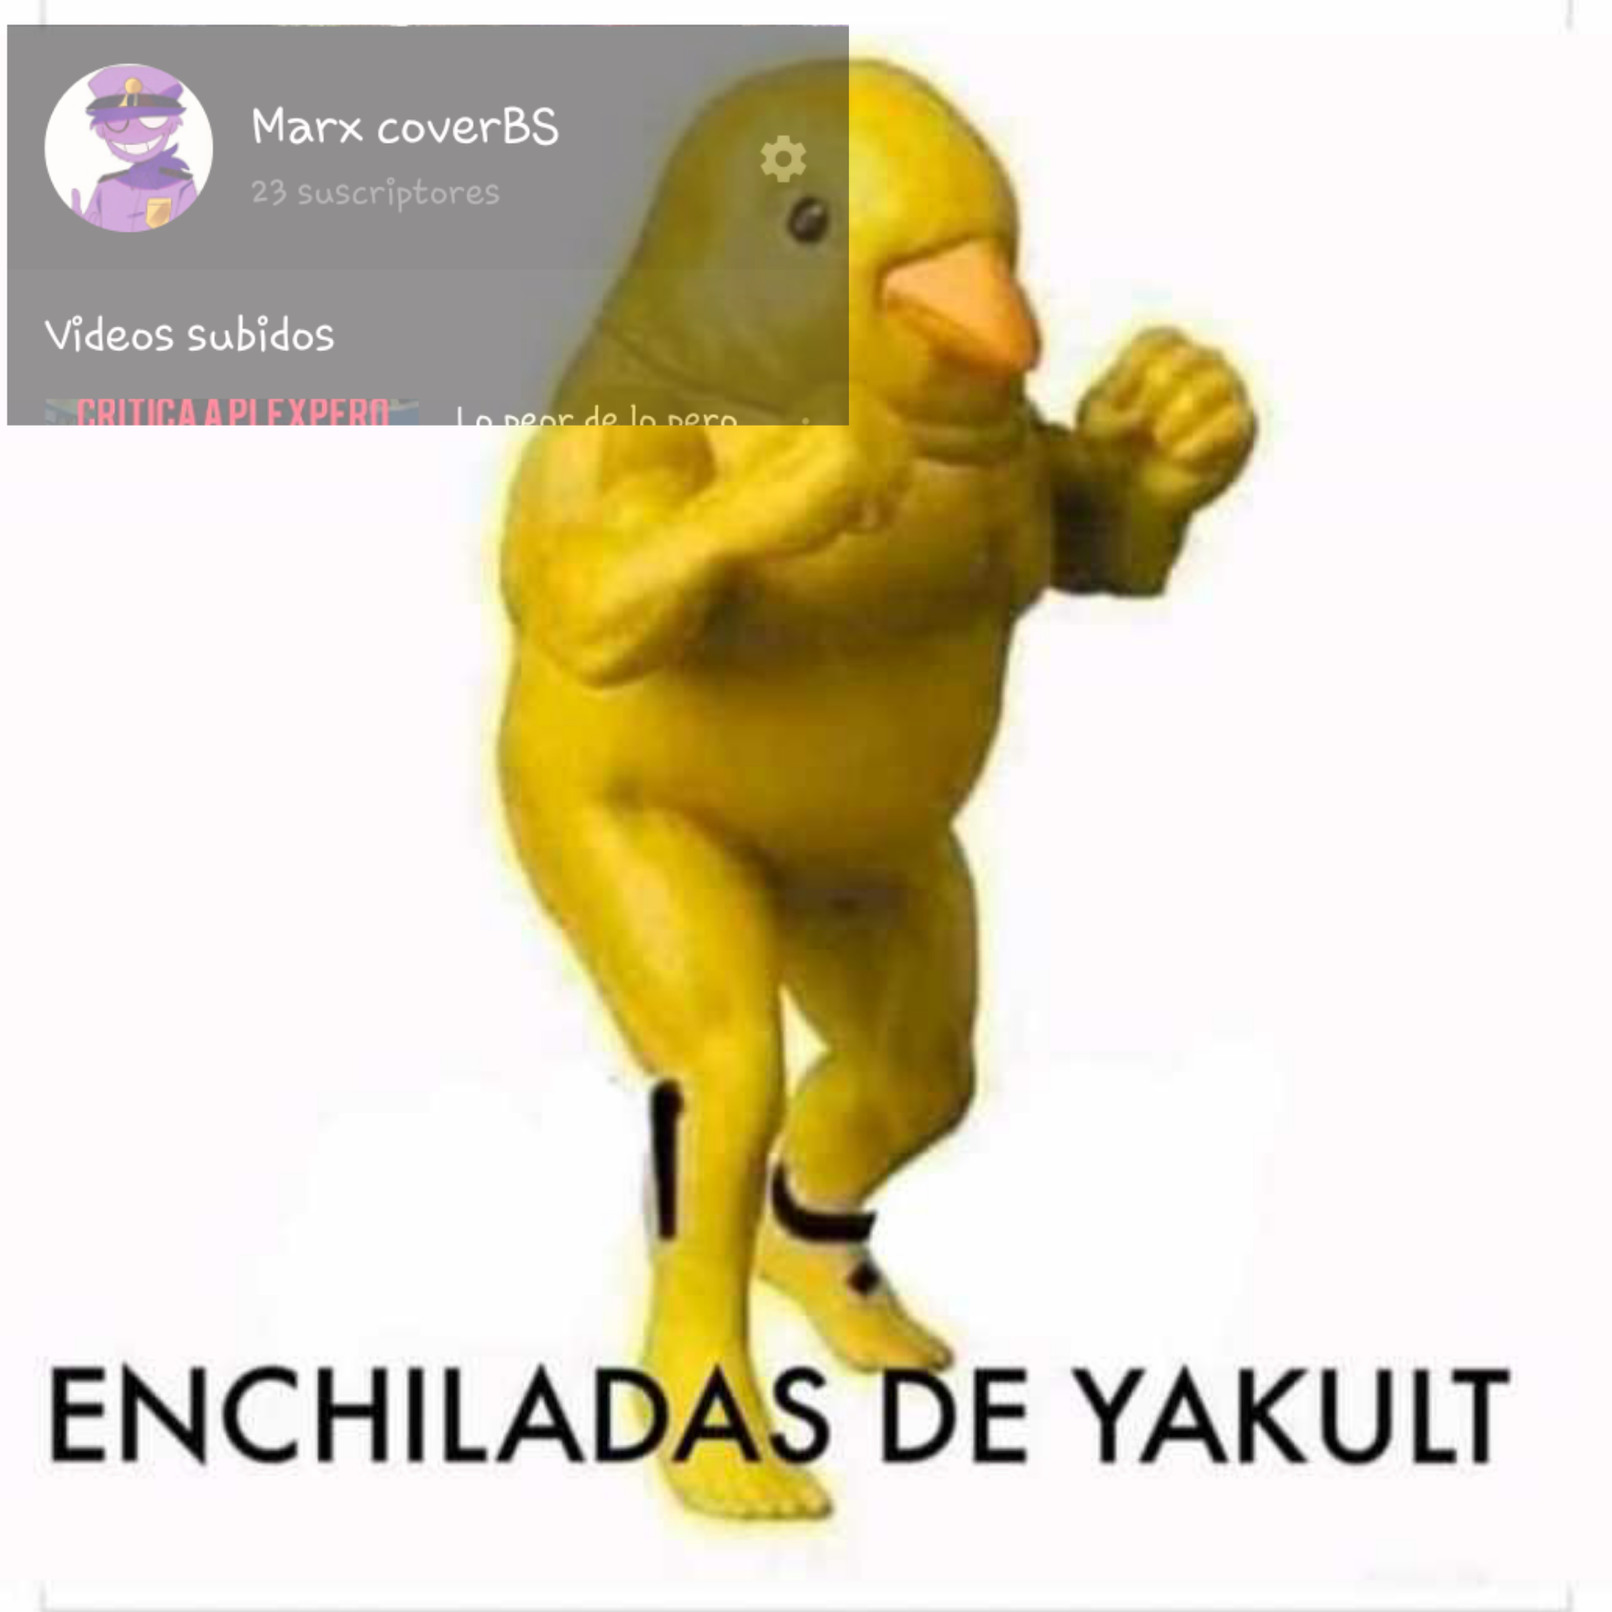 Enchiladas de yakullt - meme